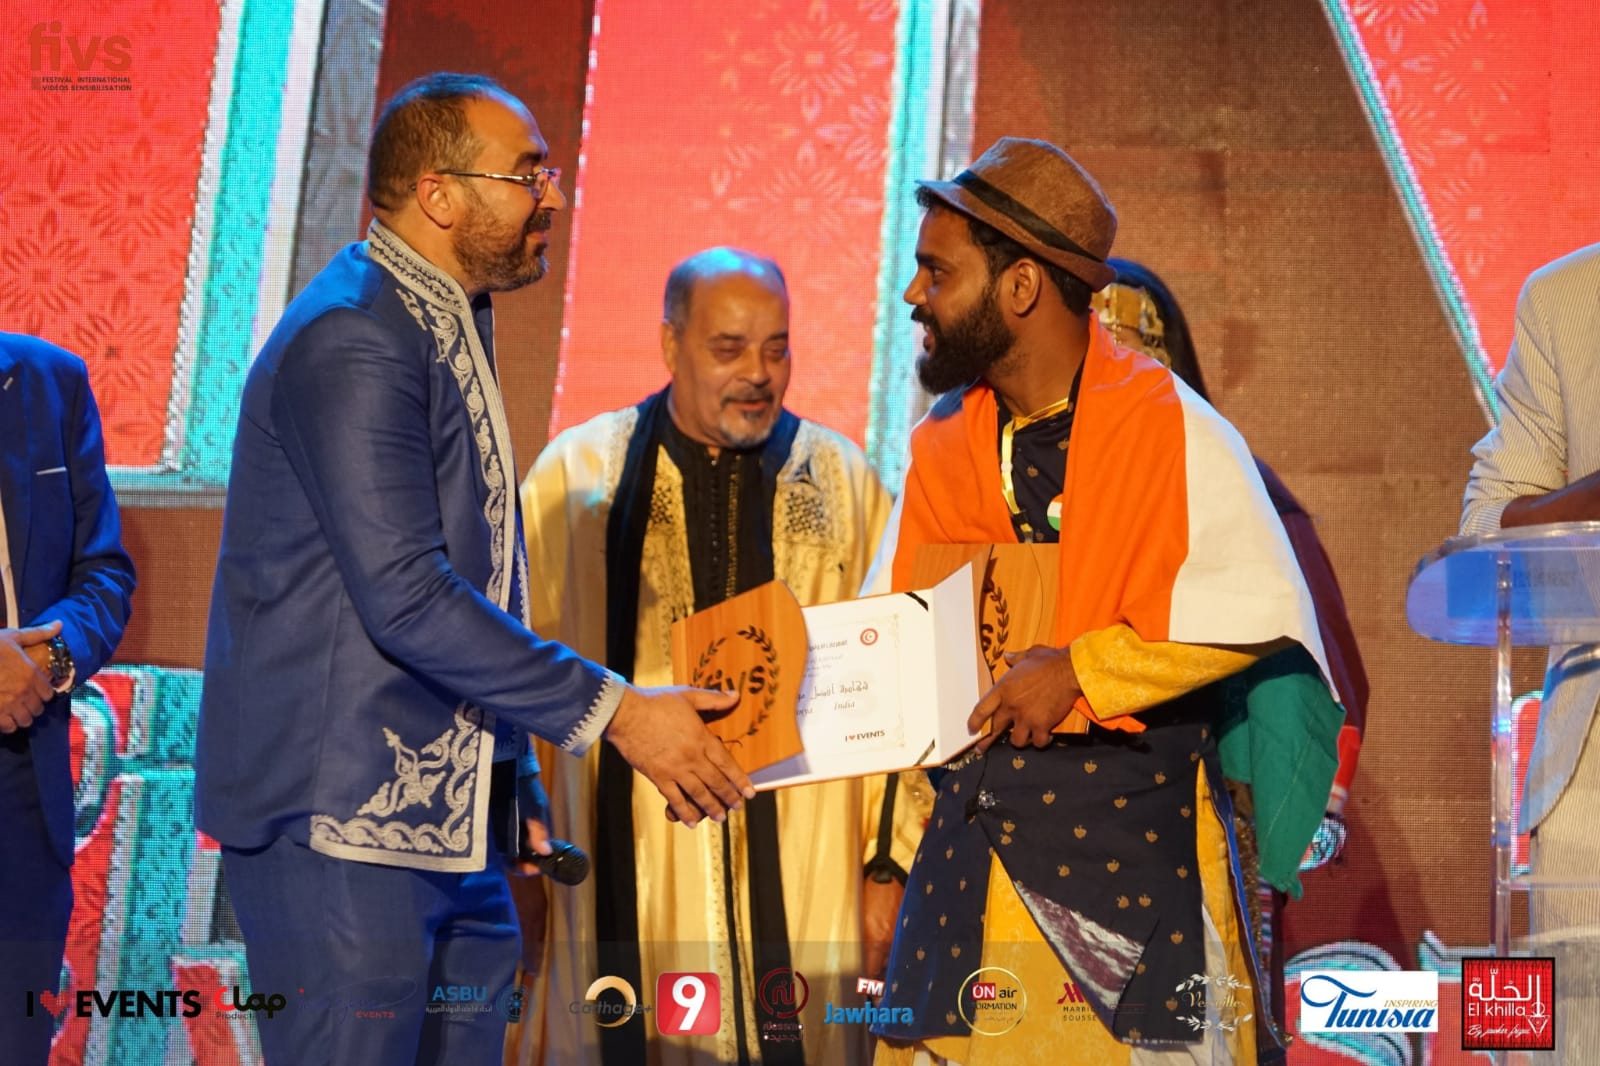 Guru Krishna DK was awarded for the short film ANANYA at the FIVS International Film Festival 2022 in Tunisia